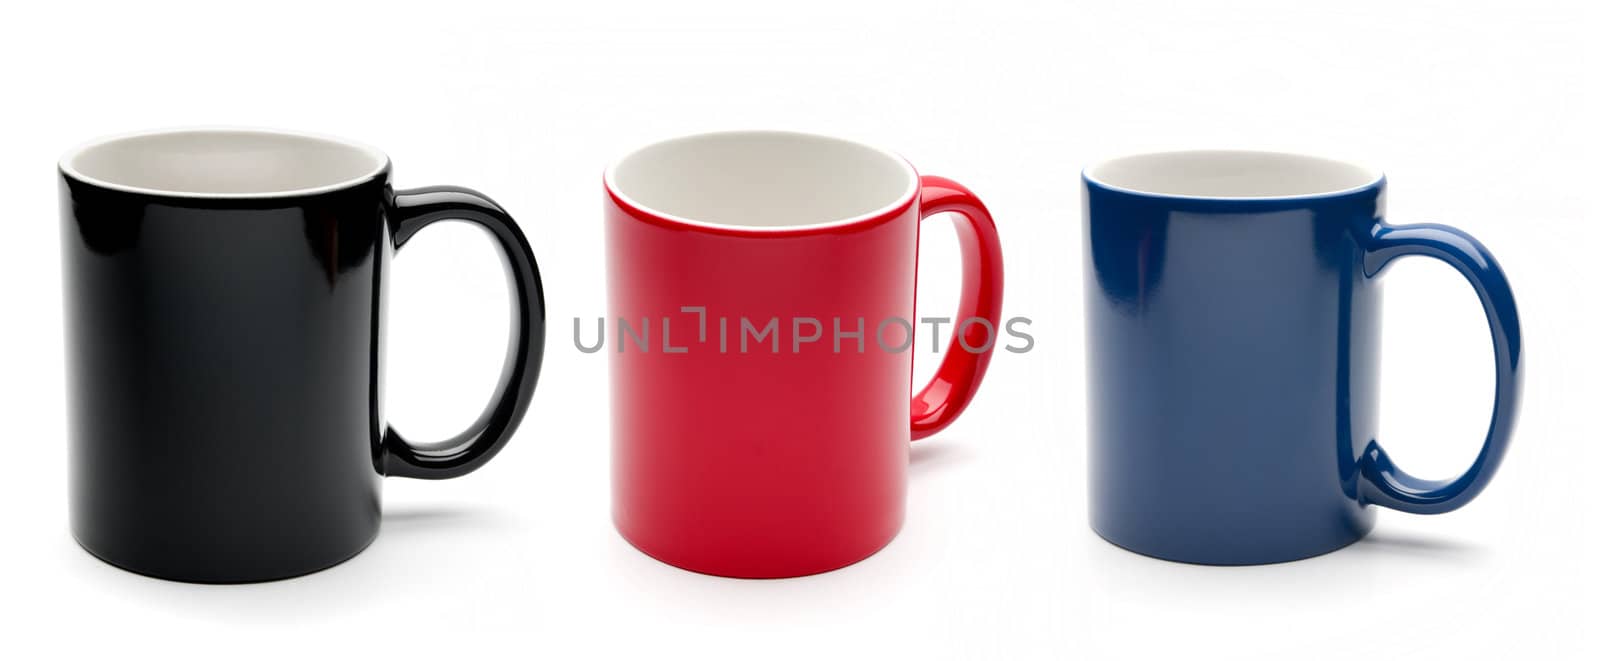 black, red and blue cups by GekaSkr